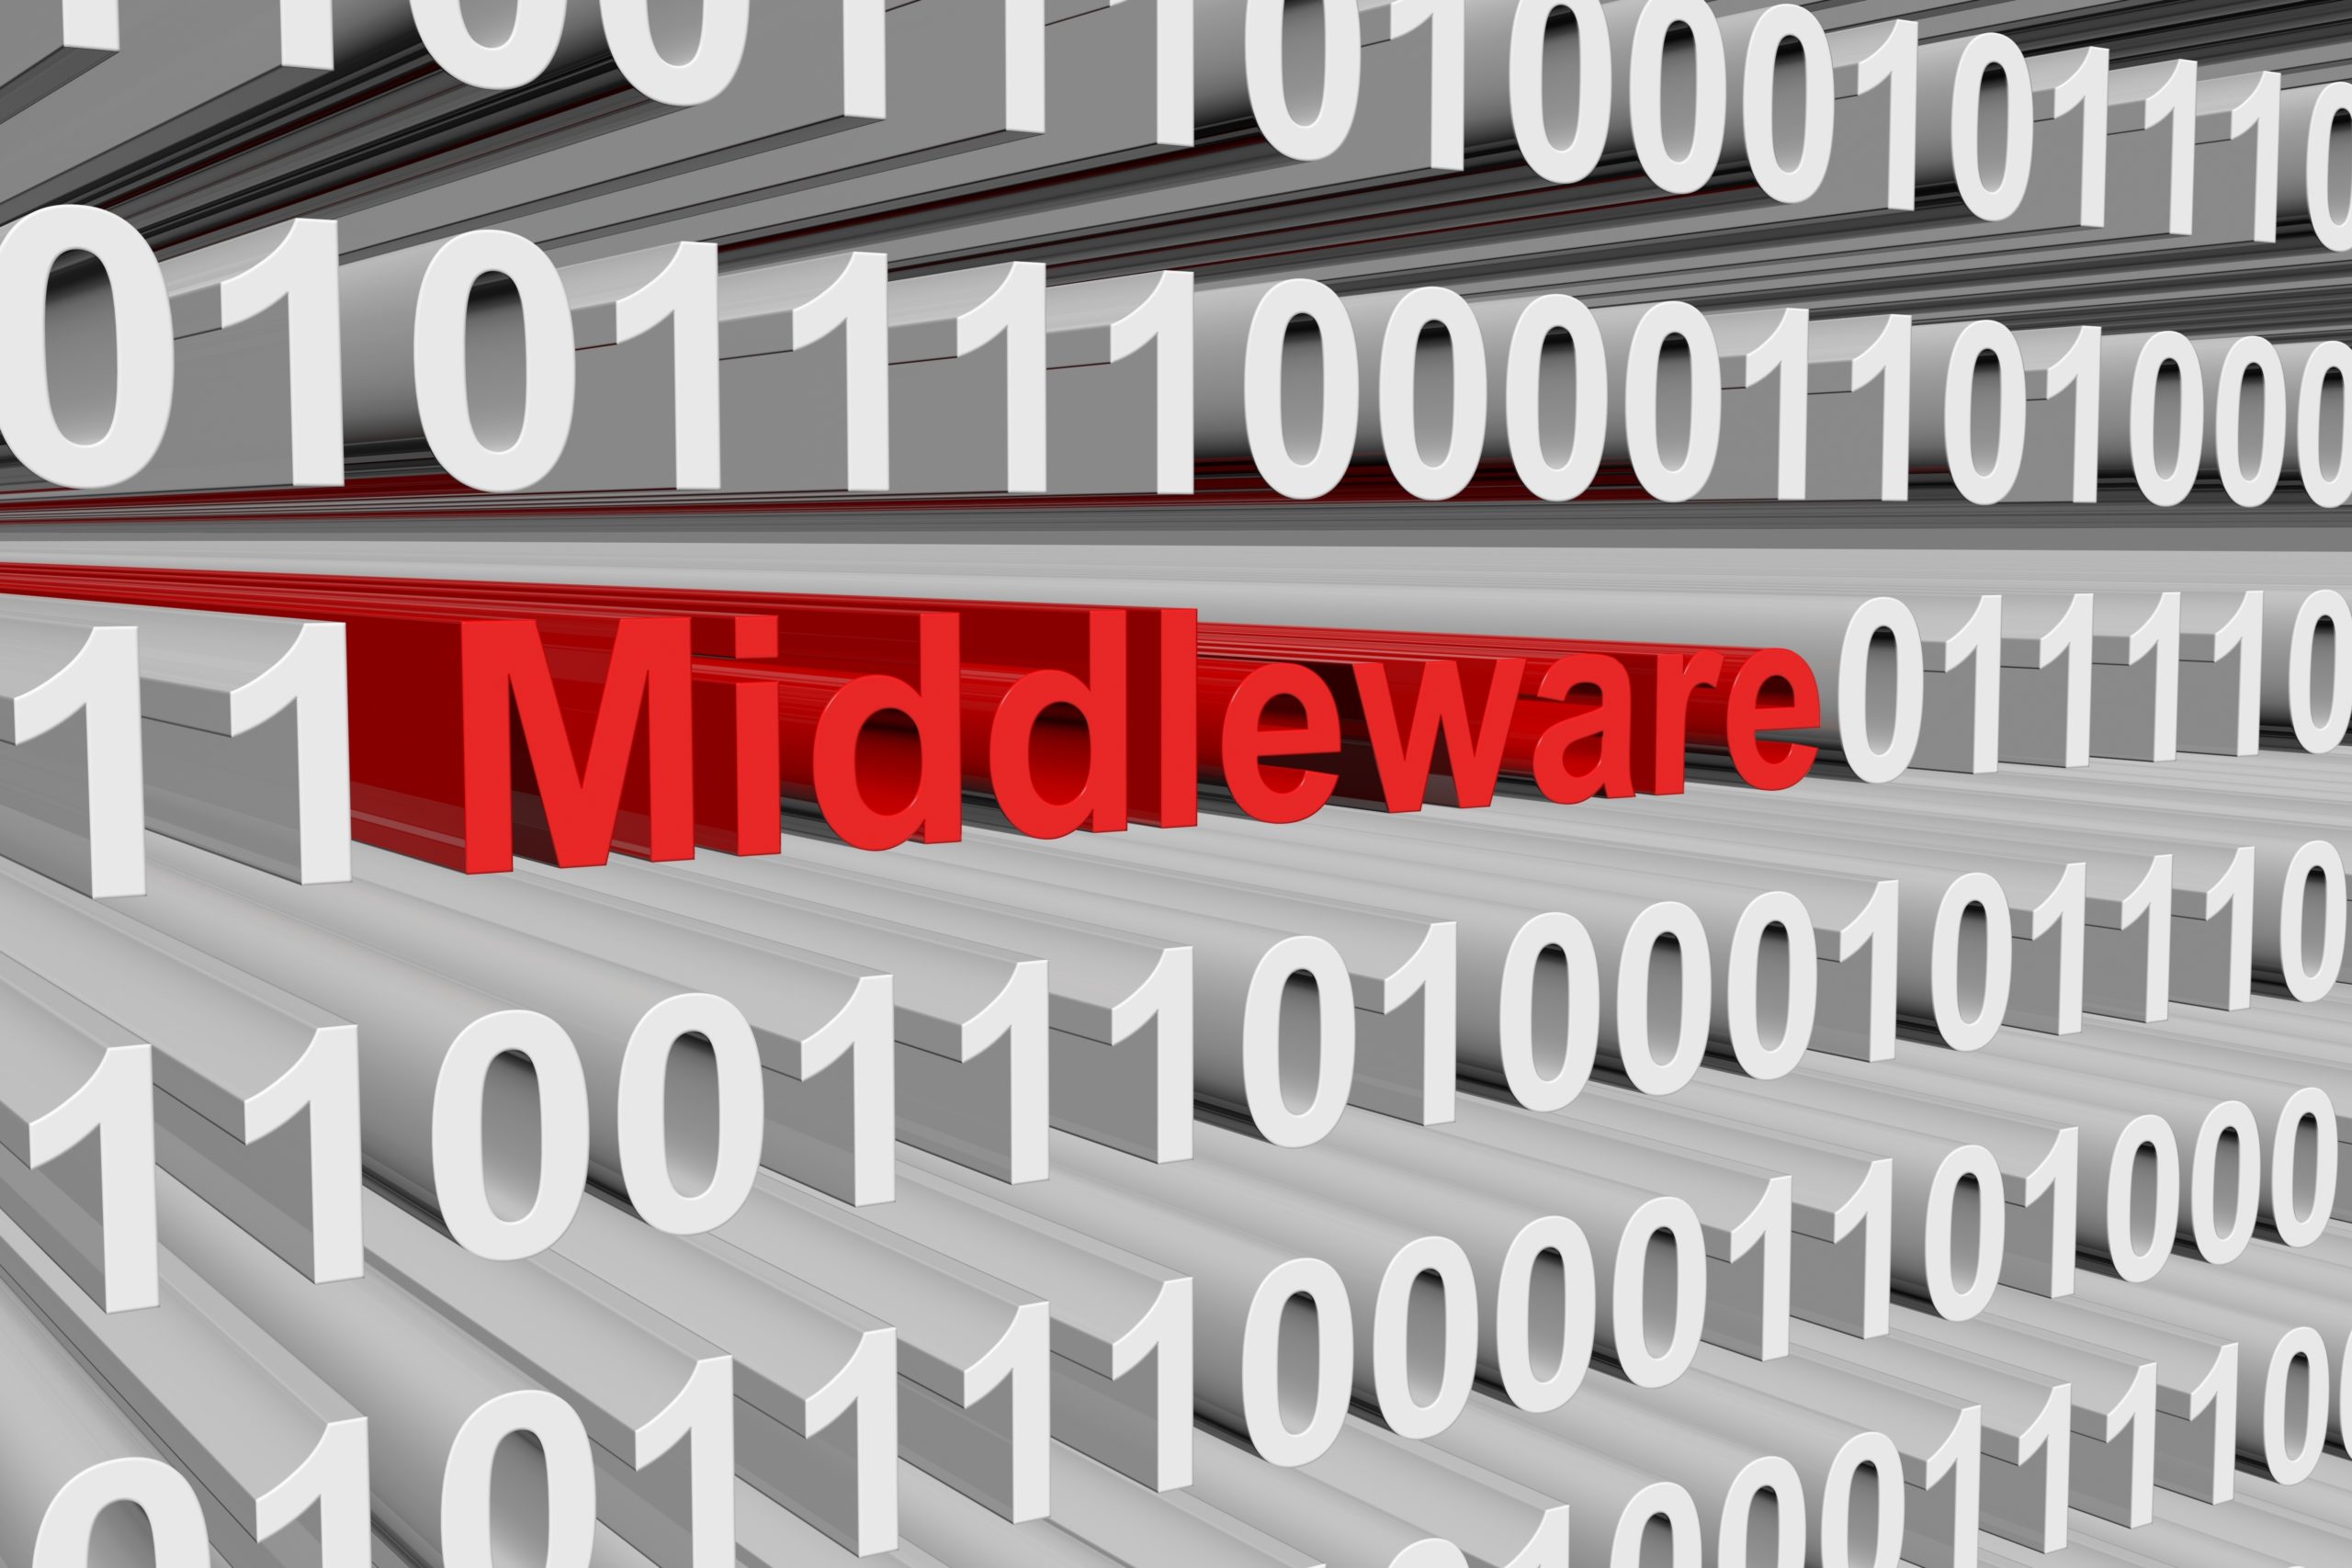 Are You an Under-appreciated Messaging Middleware Guru?